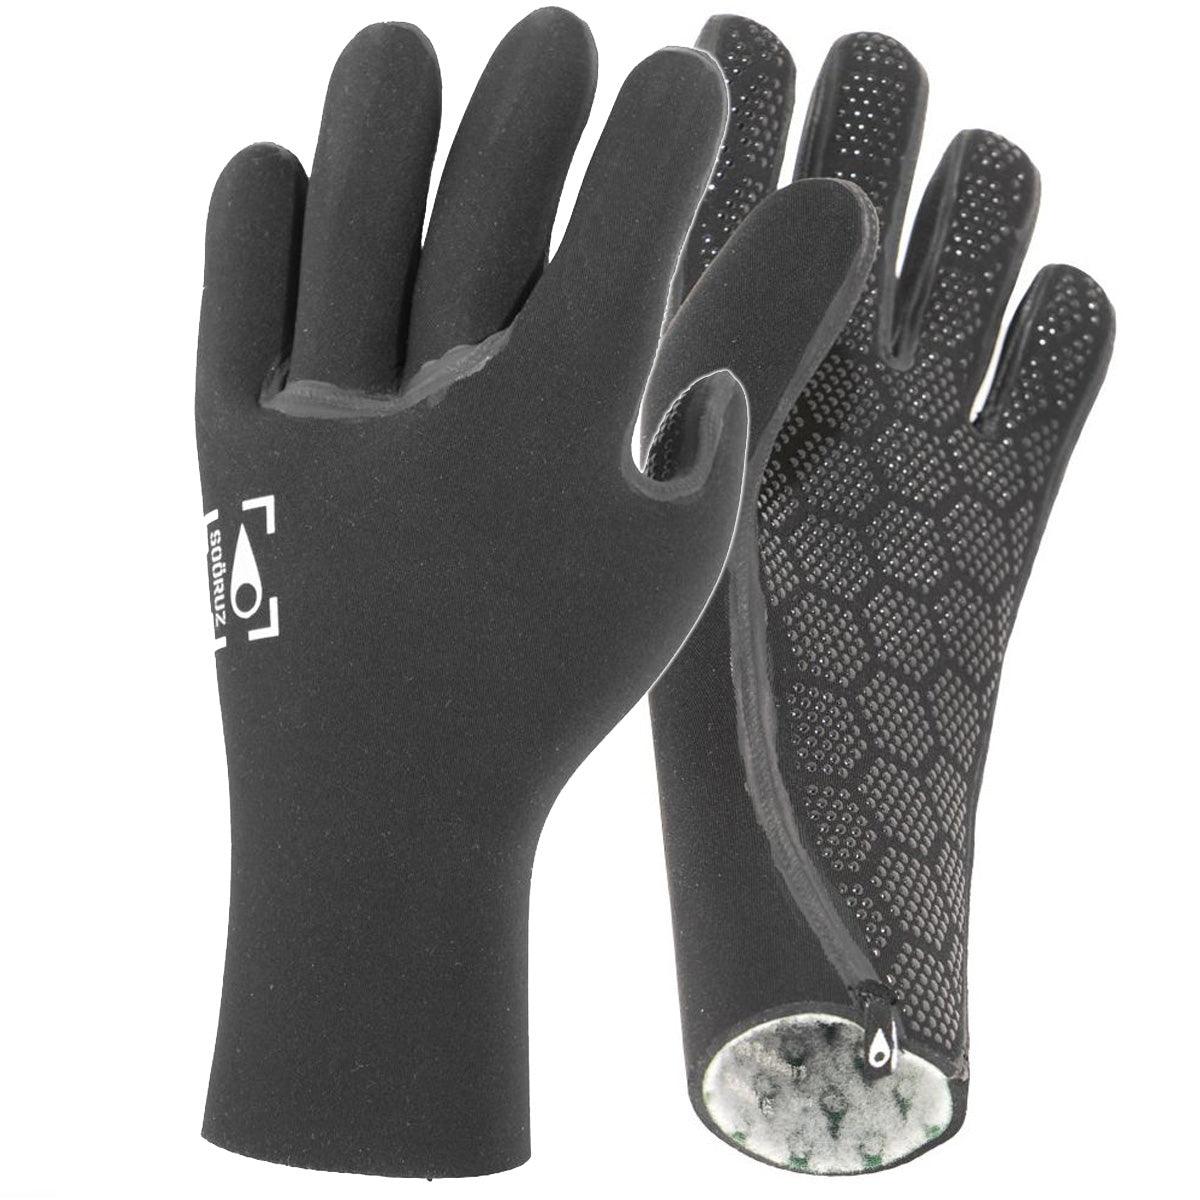 Sooruz Guru 3mm Gloves - Kiteshop.com